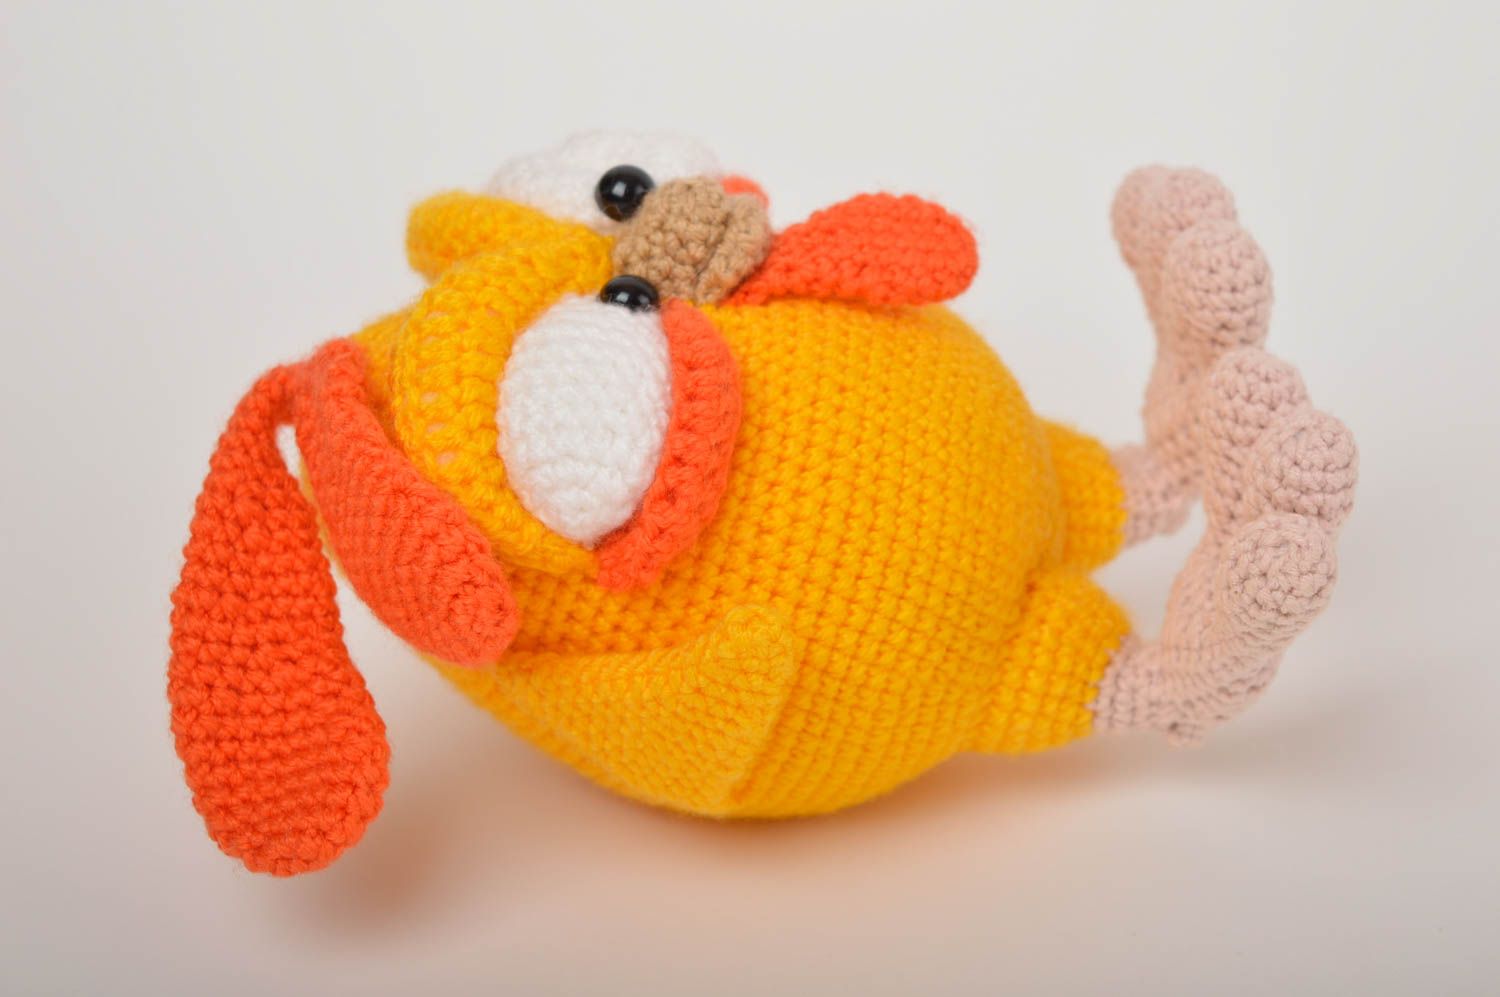 Muñeco de peluche hecho a mano juguete tejido a crochet regalo original foto 4